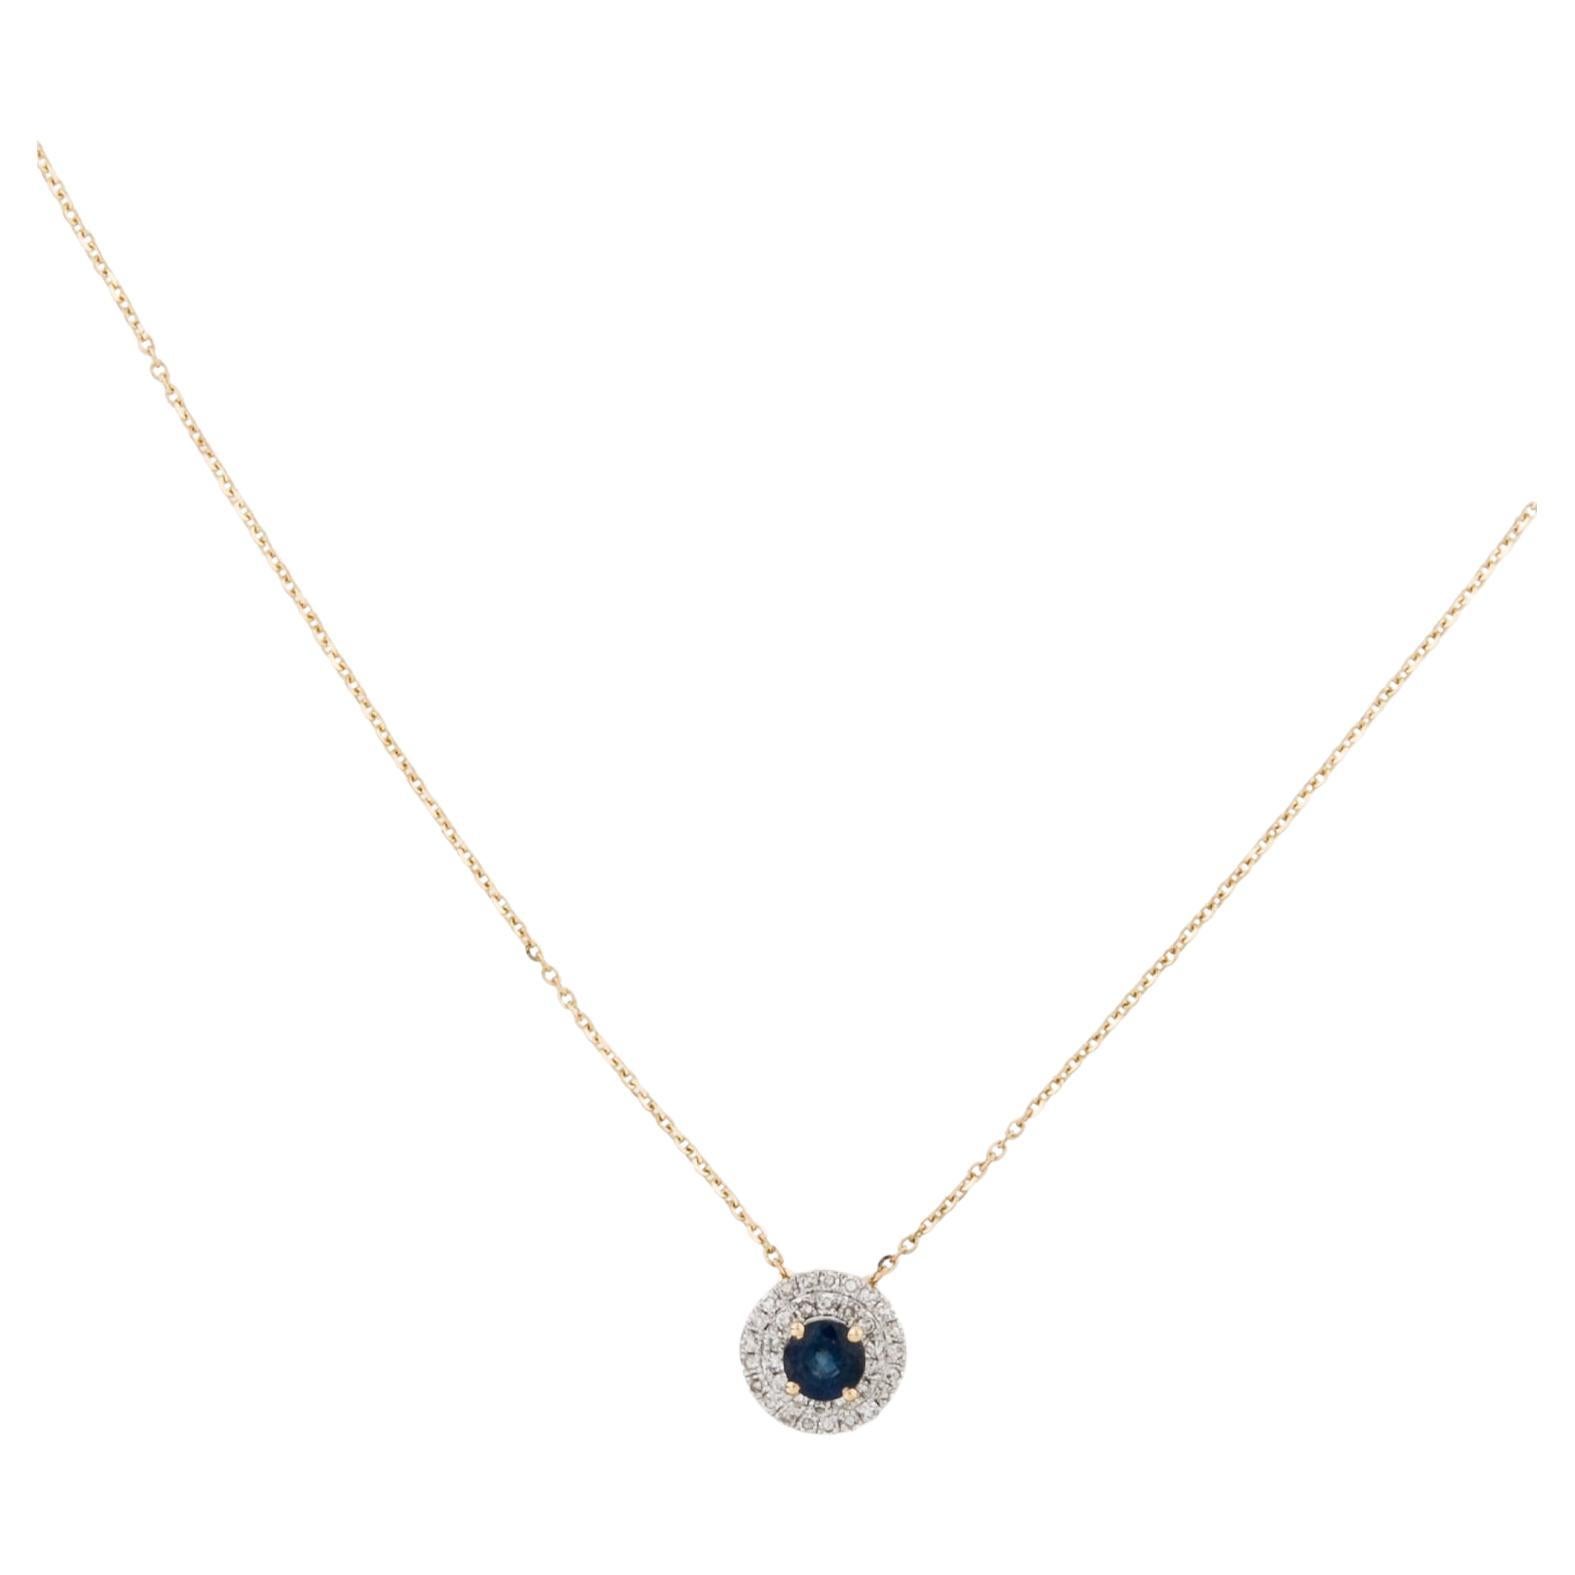 Stunning 14K Sapphire & Diamond Pendant Necklace: Timeless Elegance, Luxury For Sale